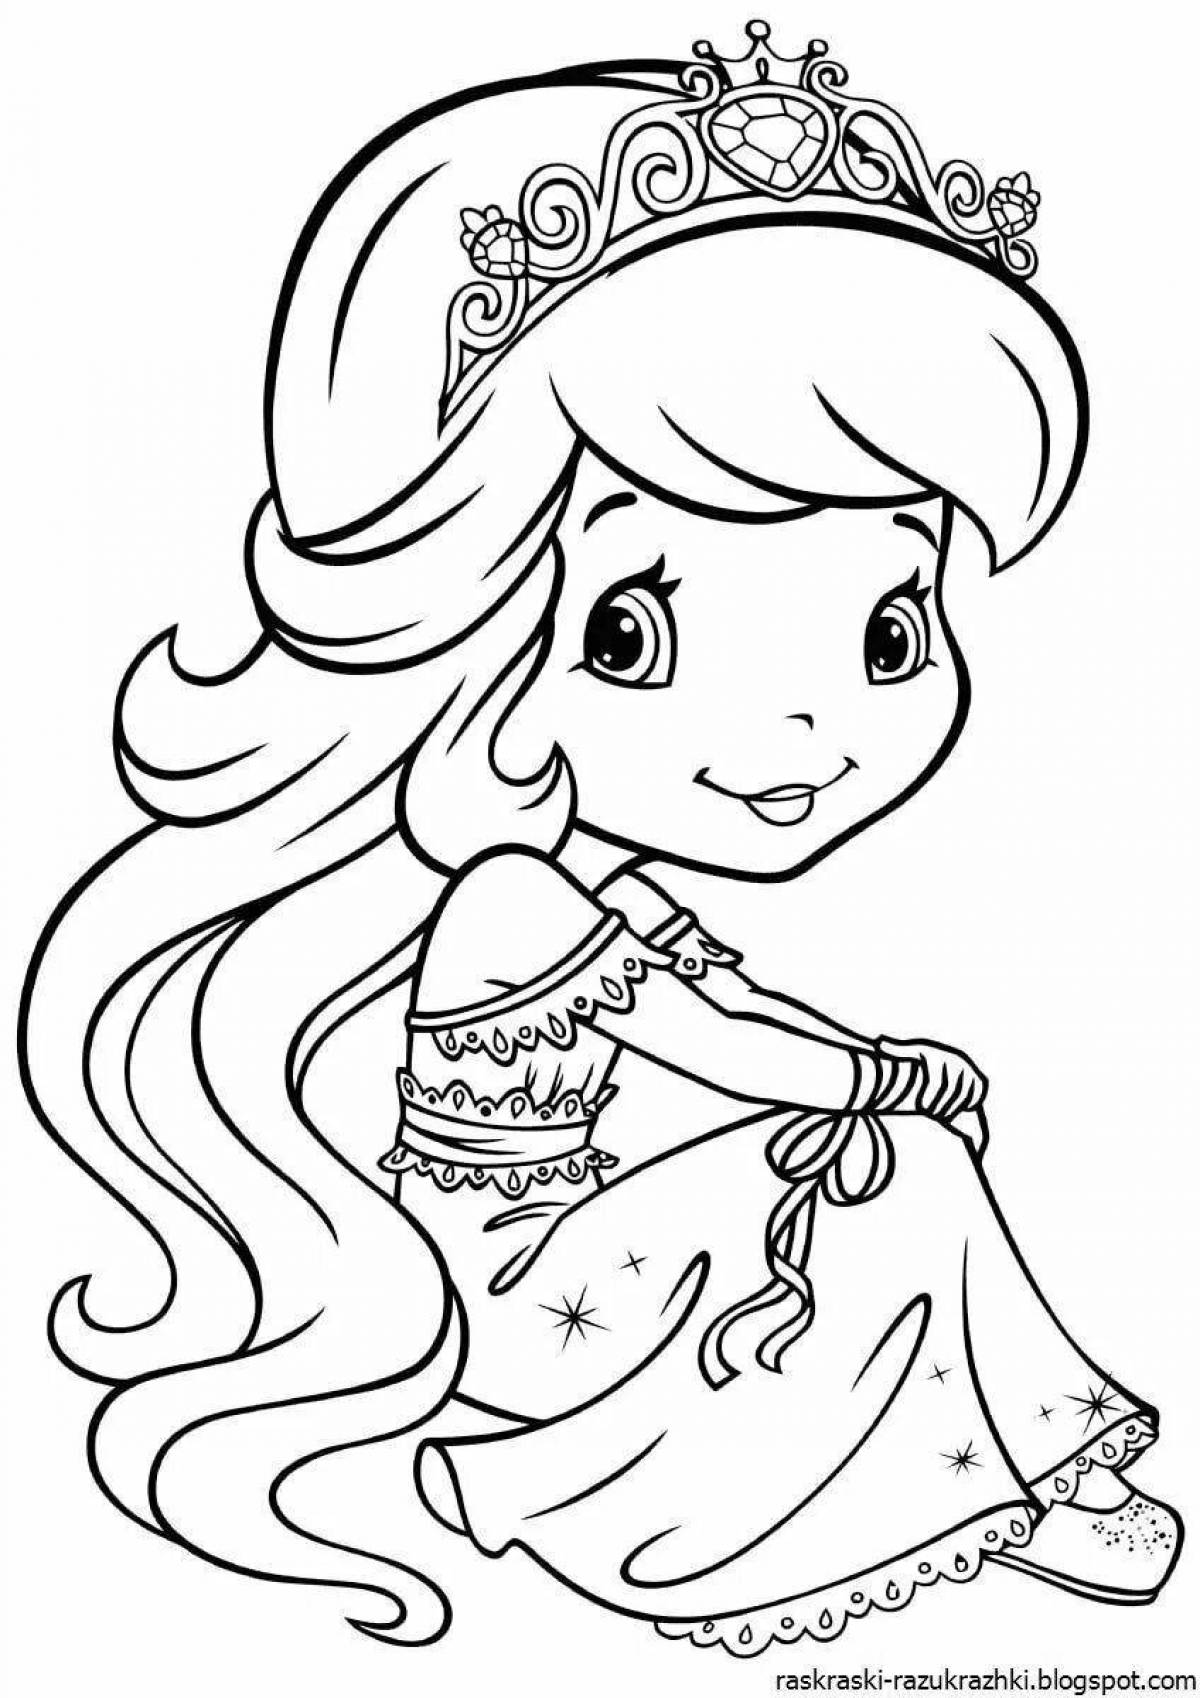 Wonderful coloring for girls 3 years, princess